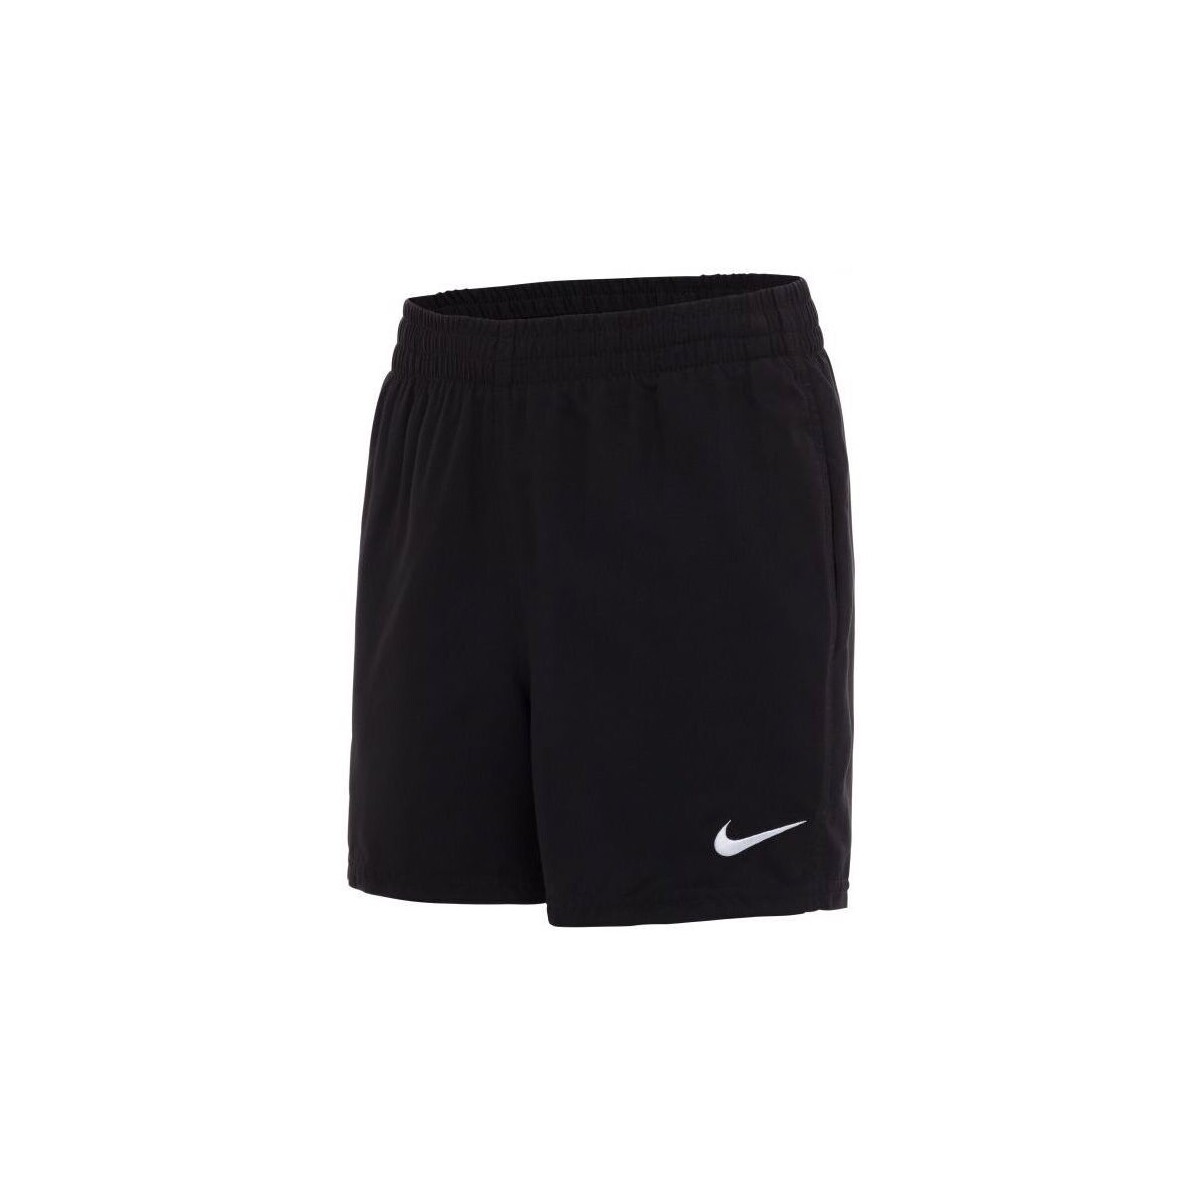 Abbigliamento Bambino Shorts / Bermuda Nike NESSB866 Bimbo Nero